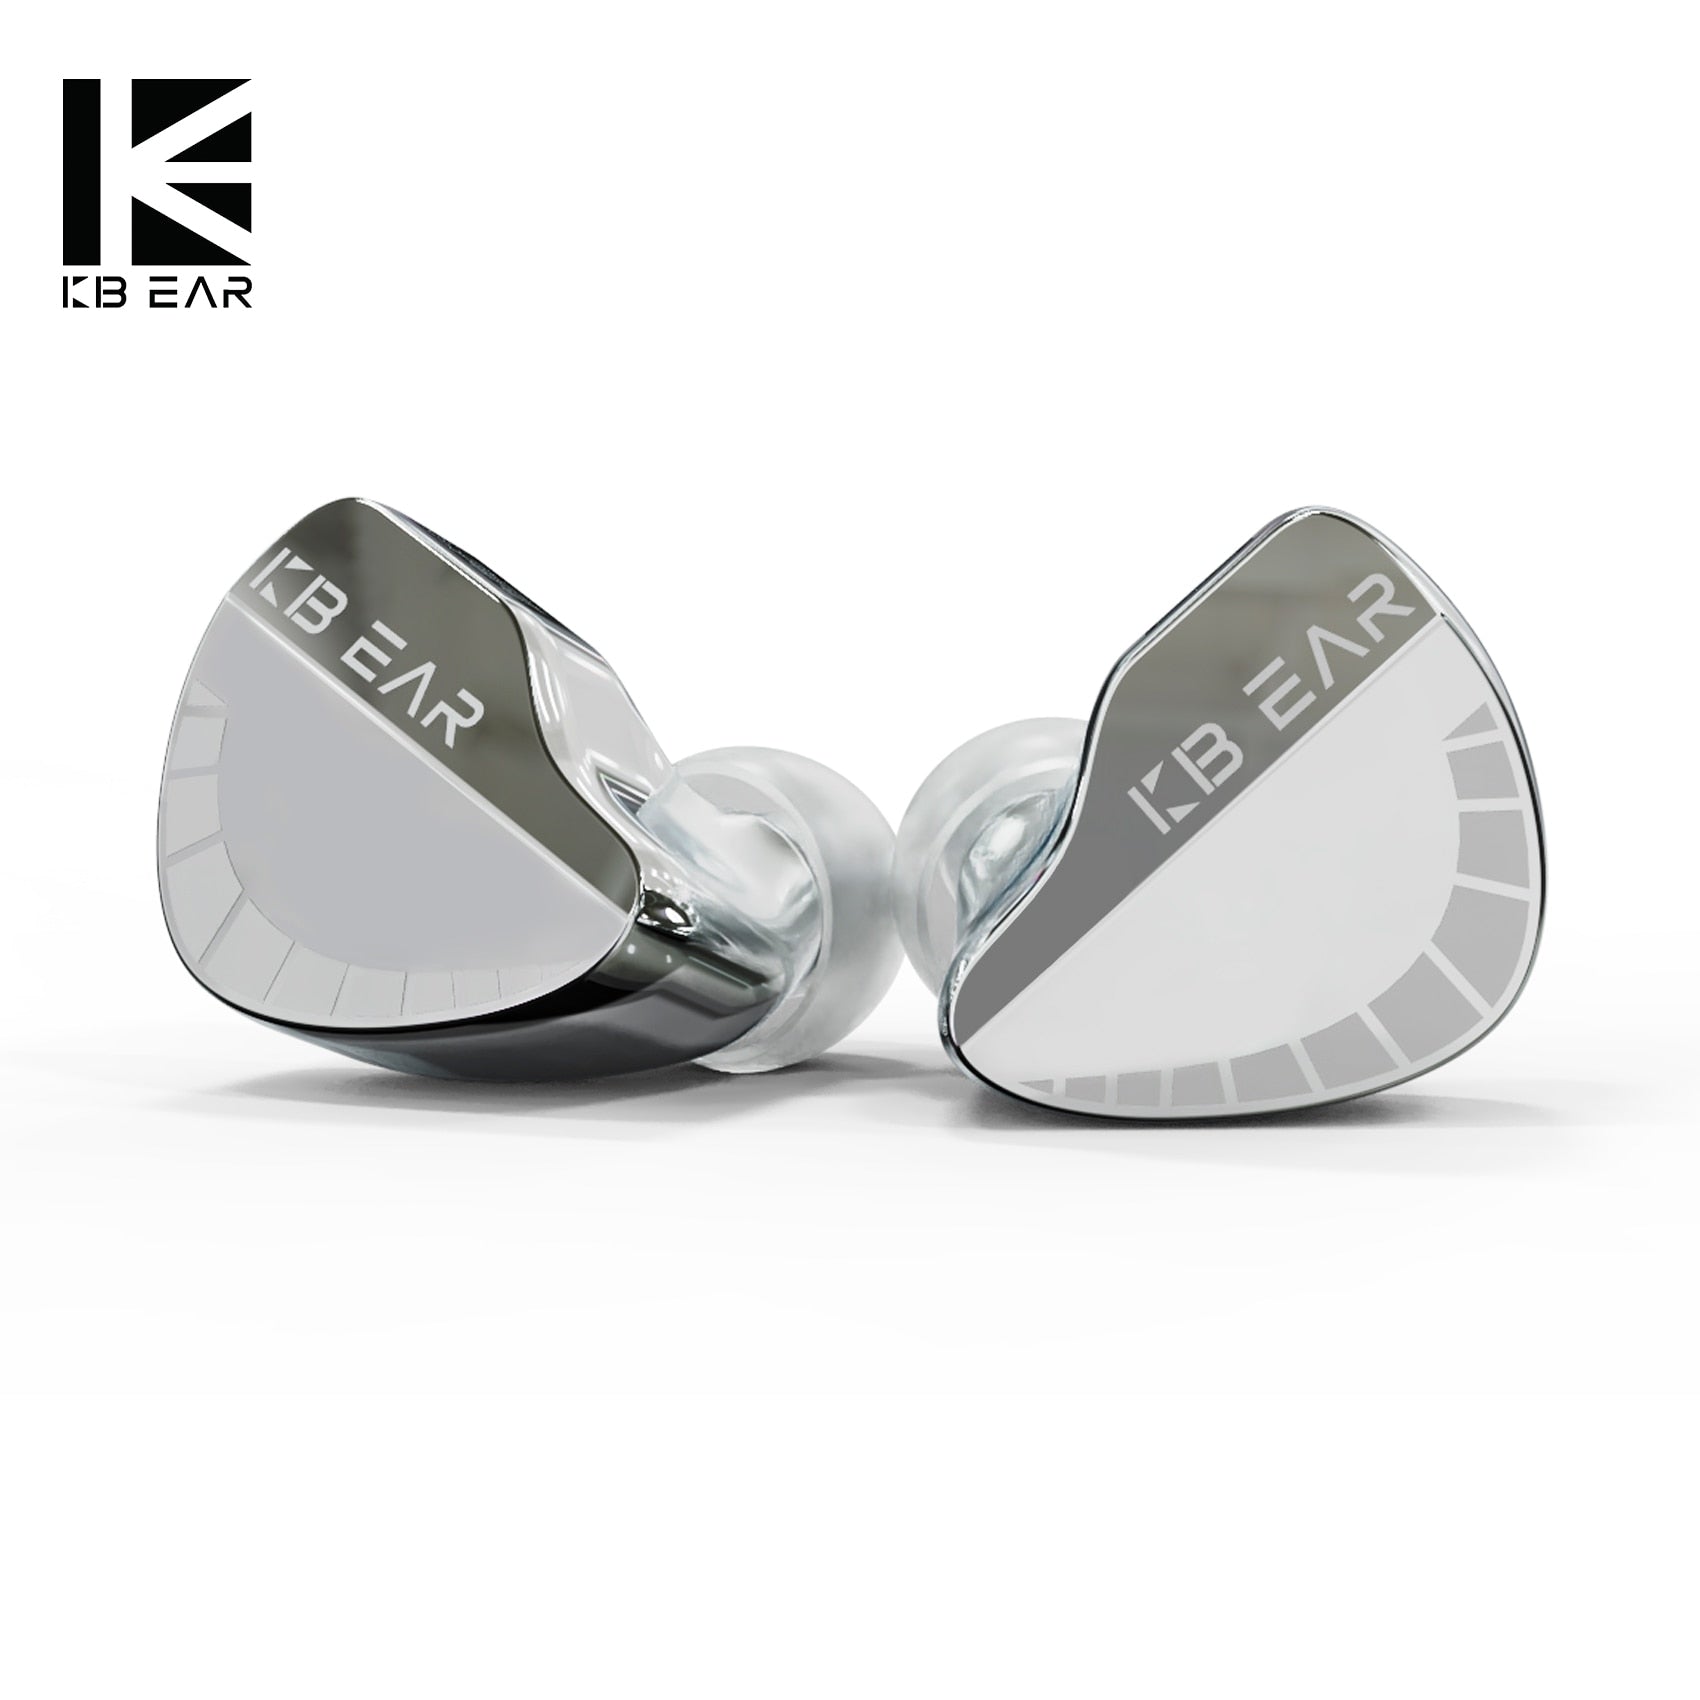 KBEAR Qinglong PU+PEEK Double-layer Composite Diaphragm IEM Metal CNC Earphone 2Pin Wired HiFi Headphone Vocal Music Run Earbud - The HiFi Cat